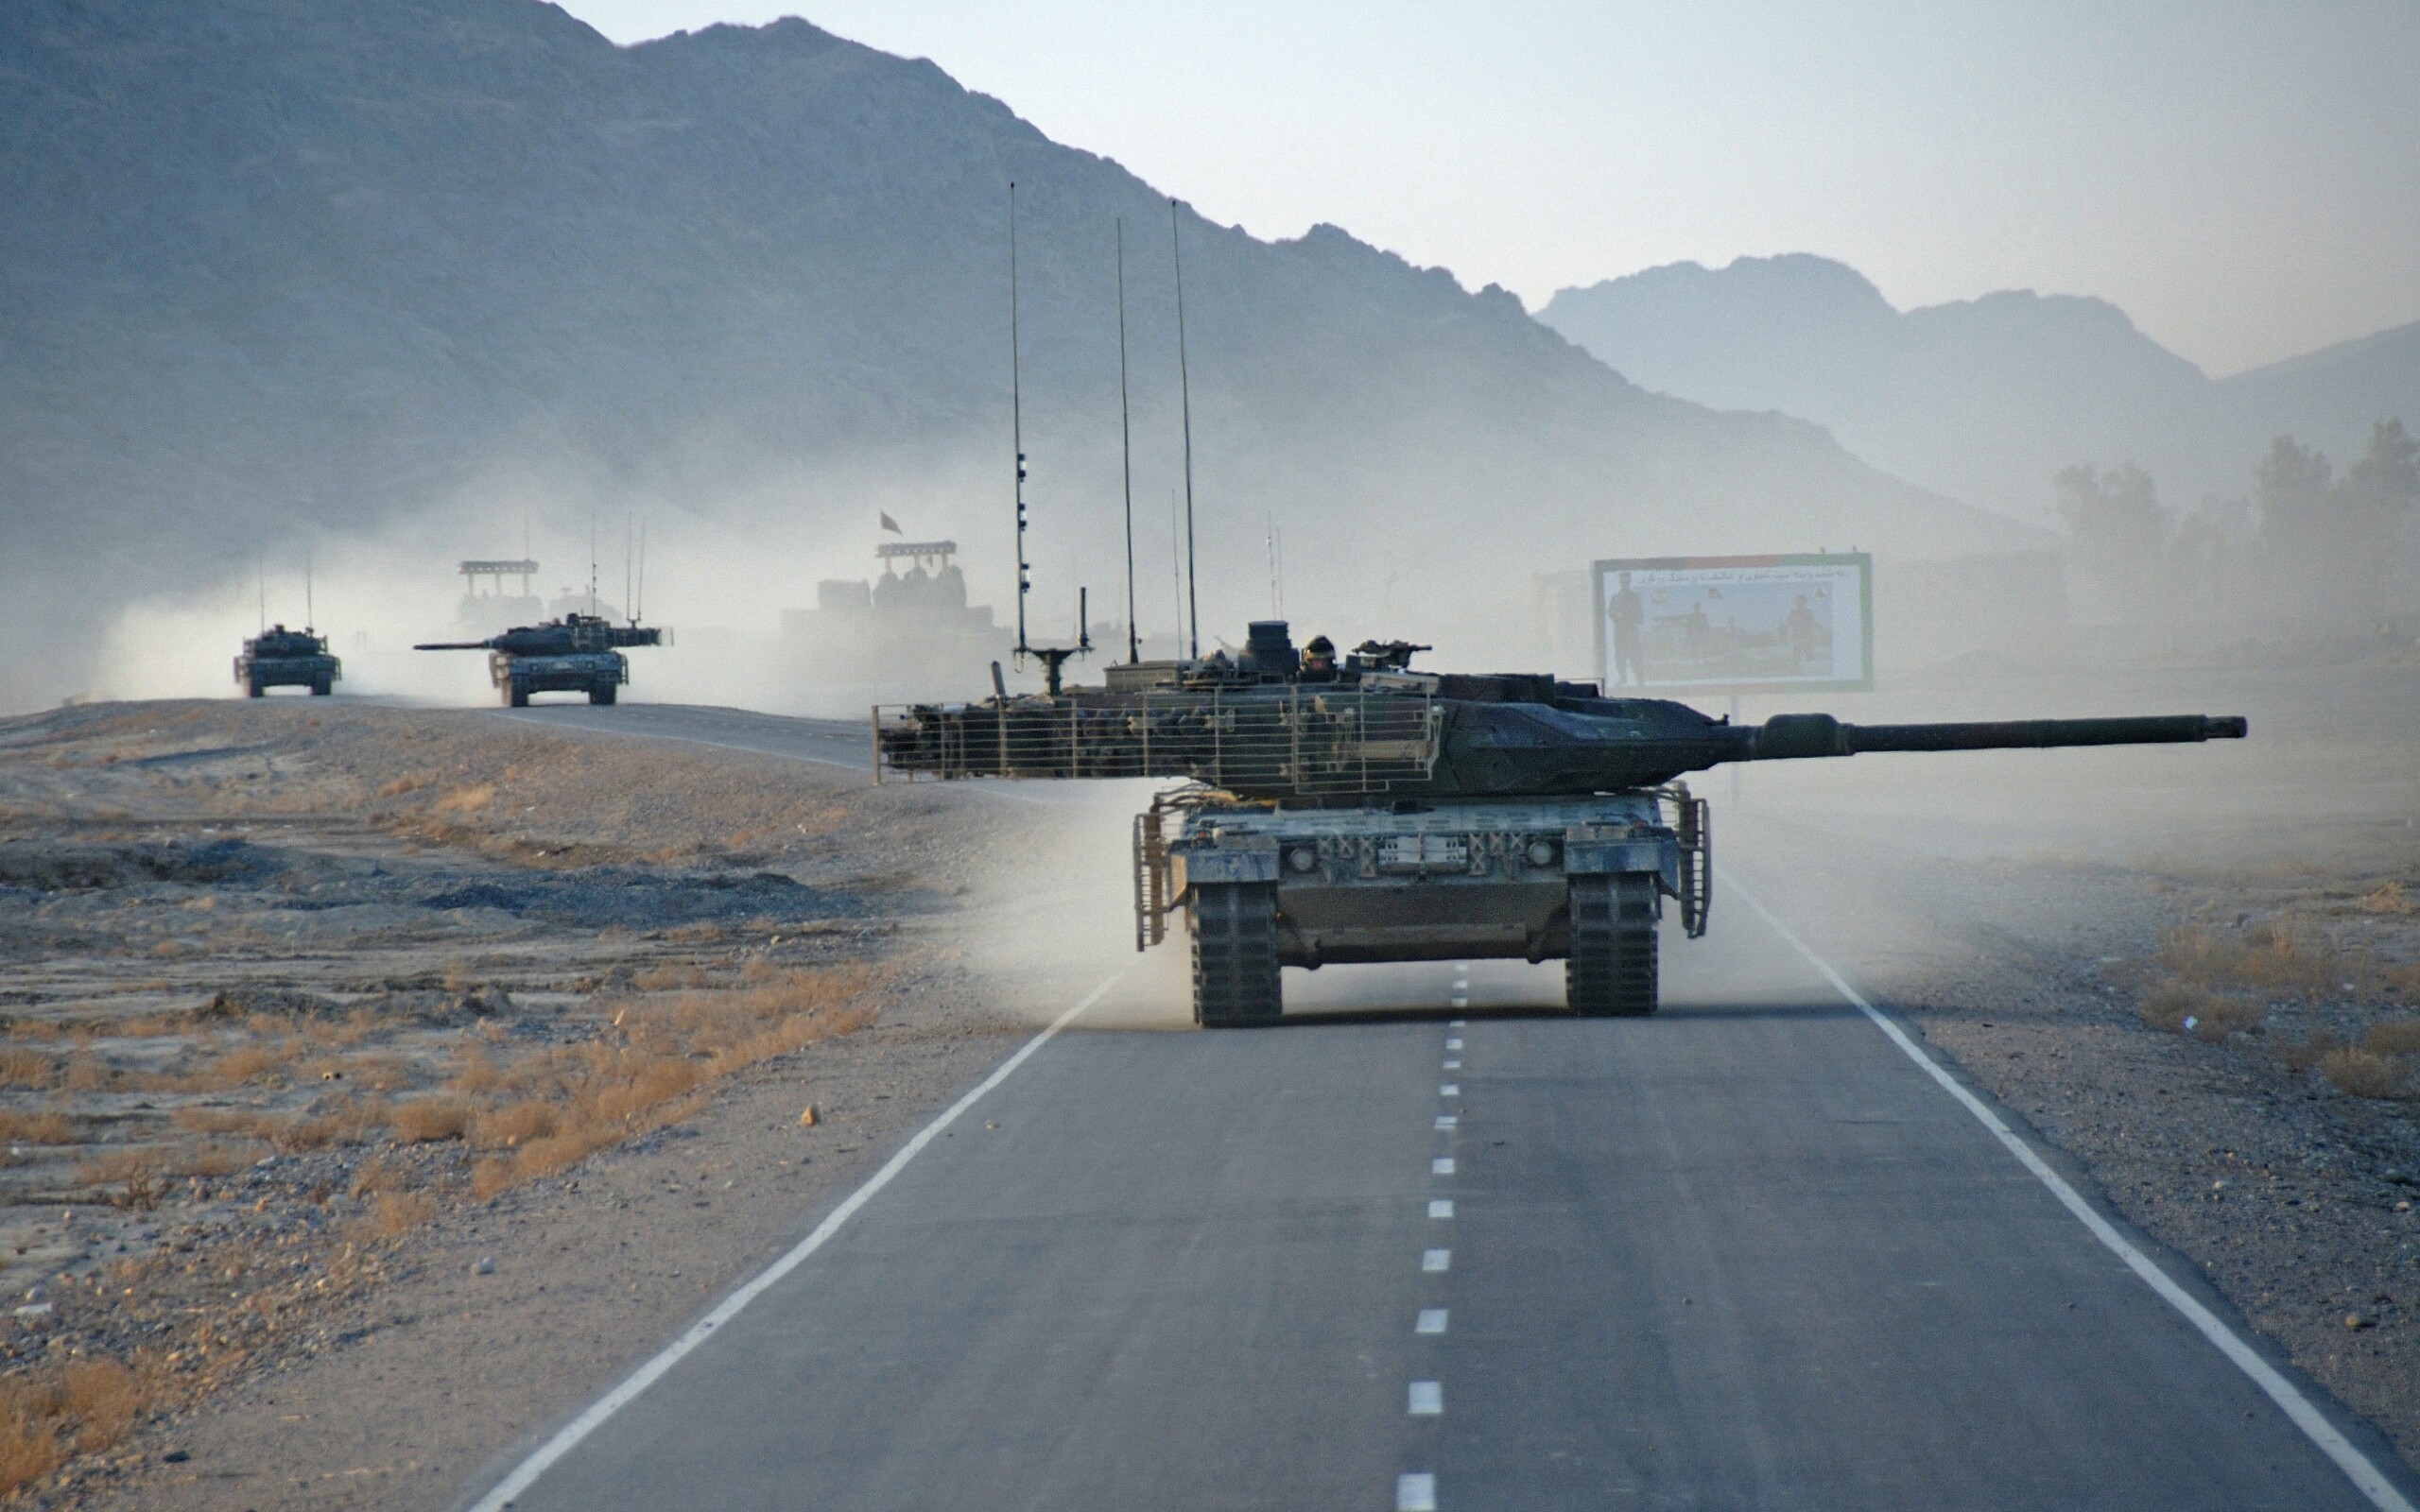 2560x1600-4580908-tank-leopard-2-vehicle-military.jpg